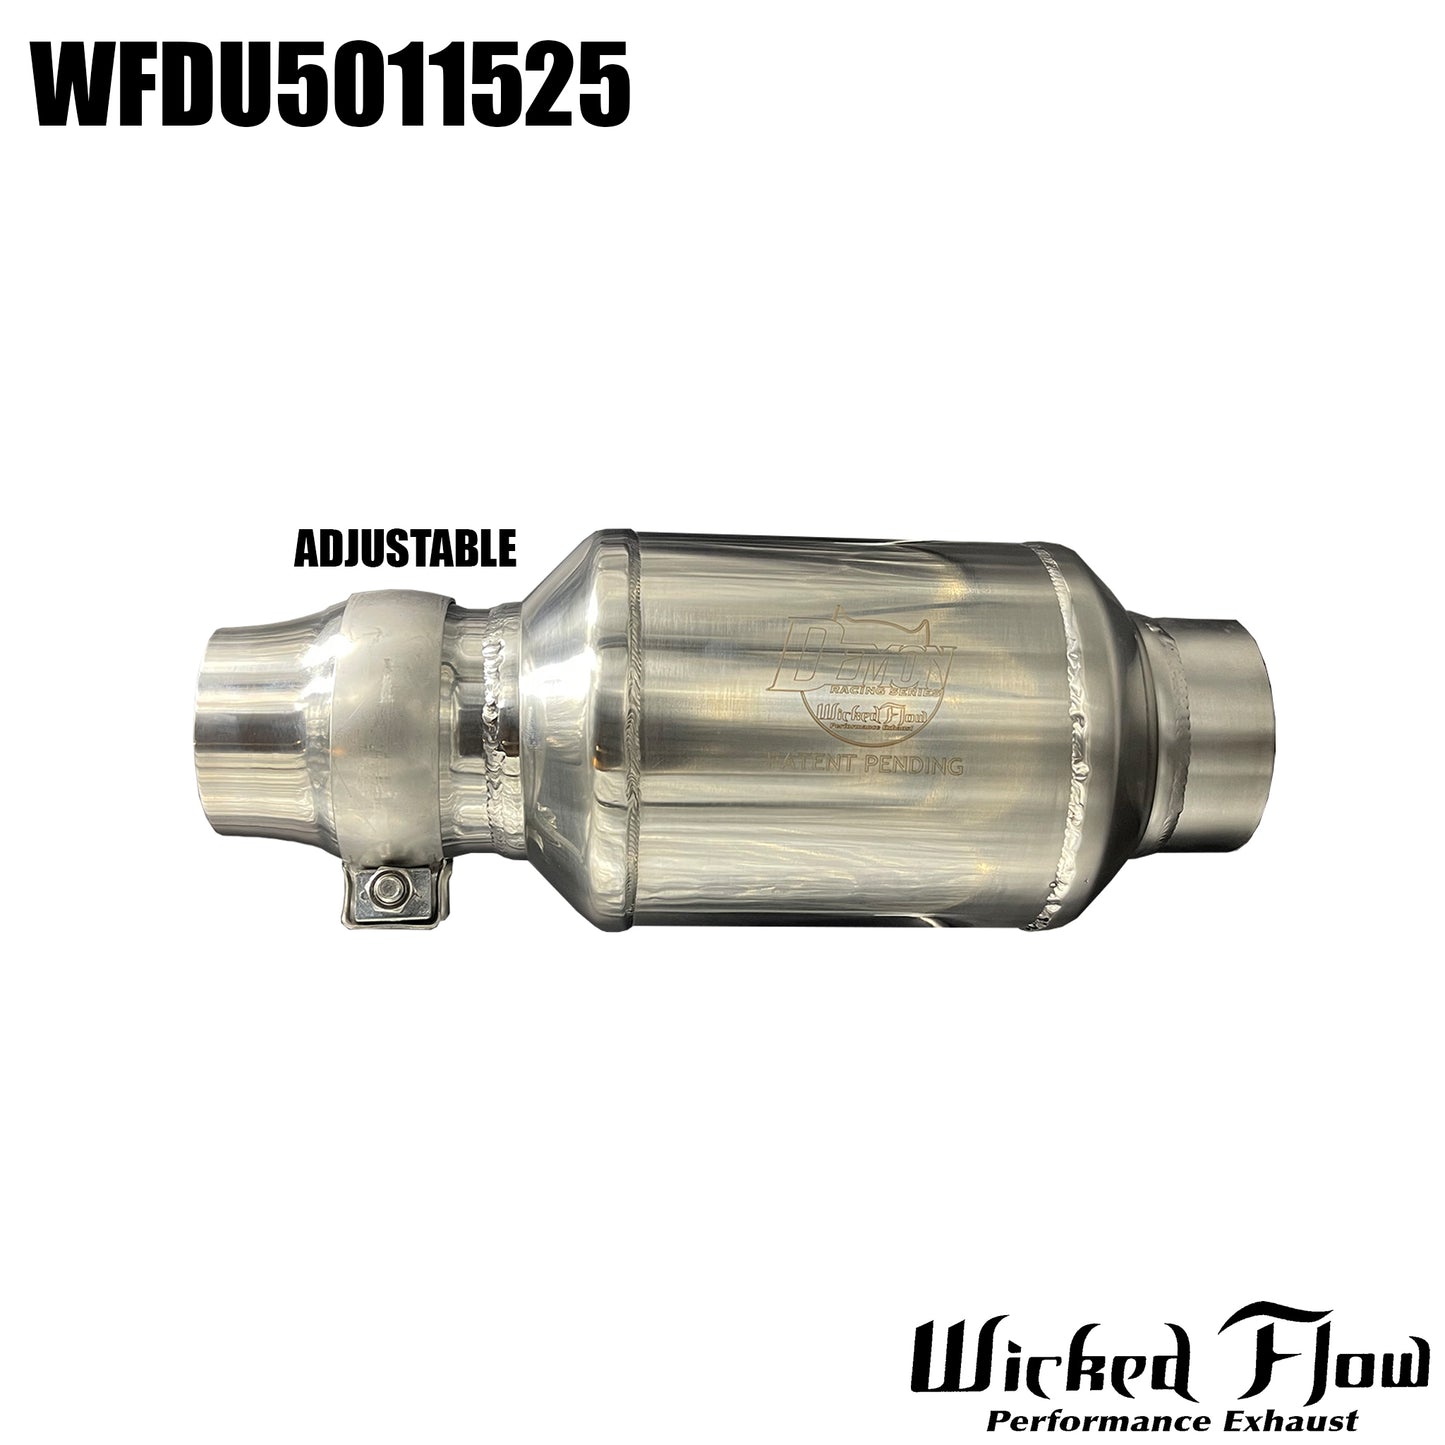 WFDU5011525 - Demon Muffler 2.5" - ADJUSTABLE